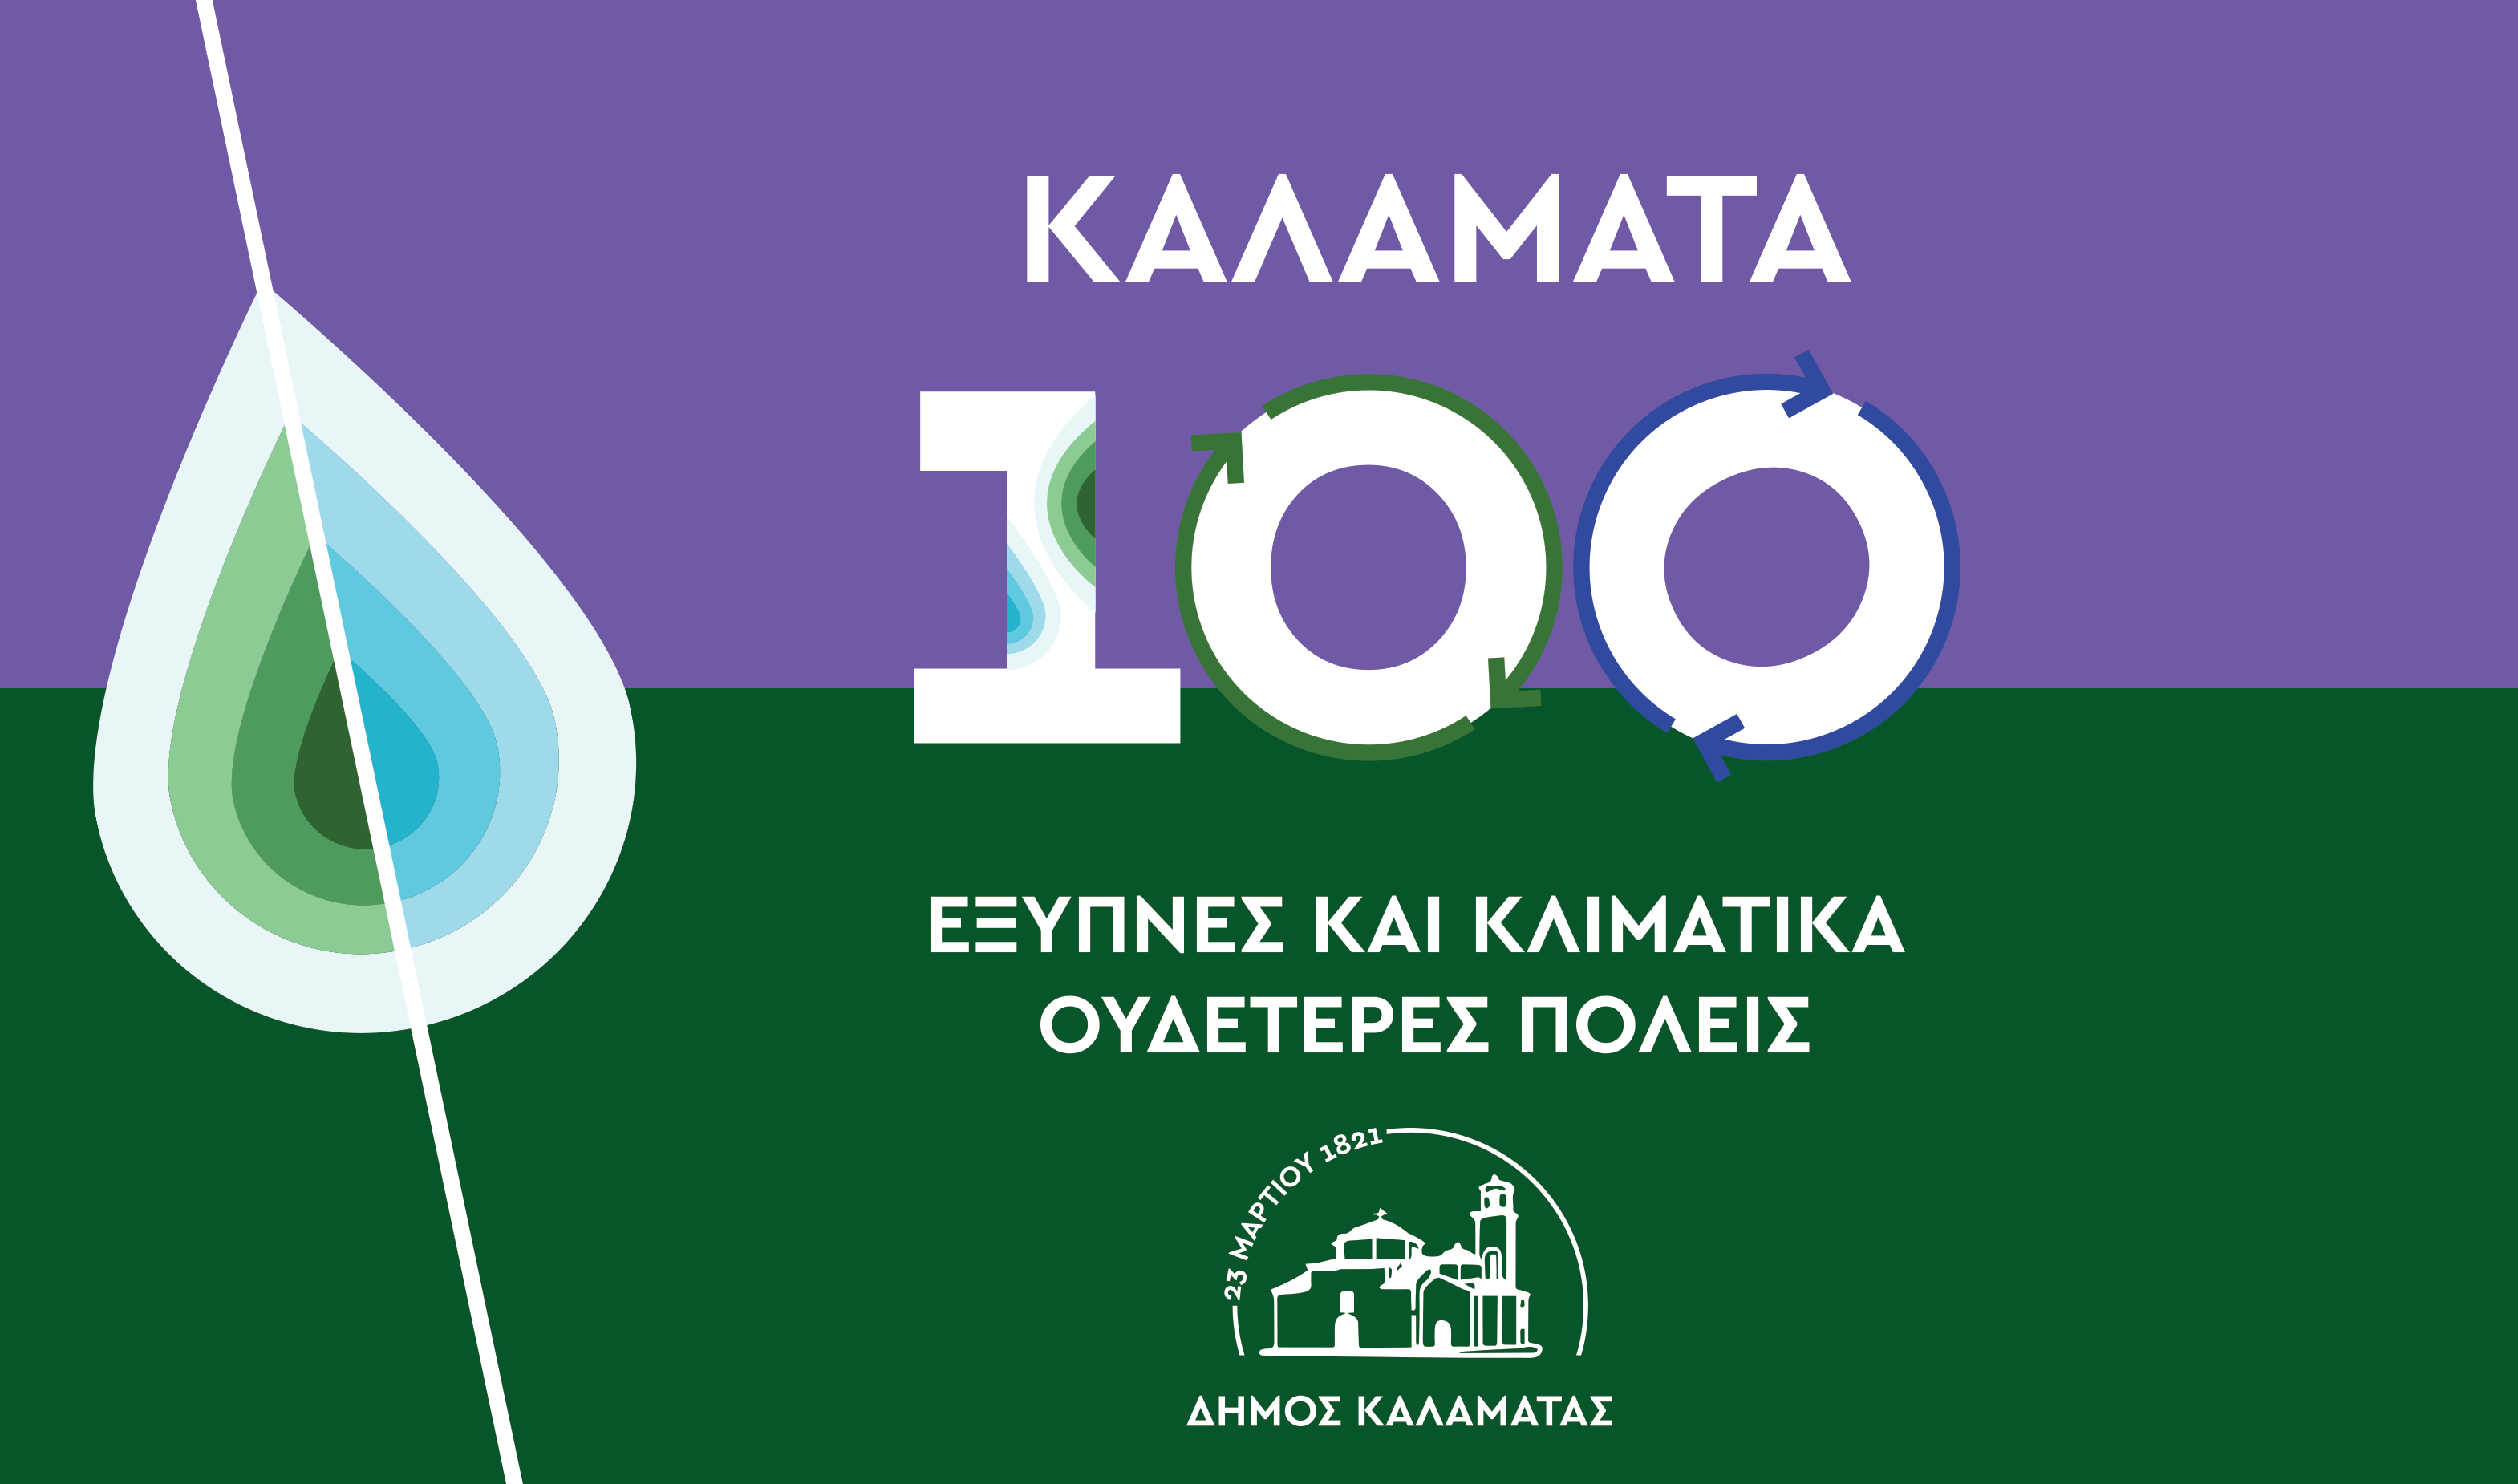 mission Kalamata2 100